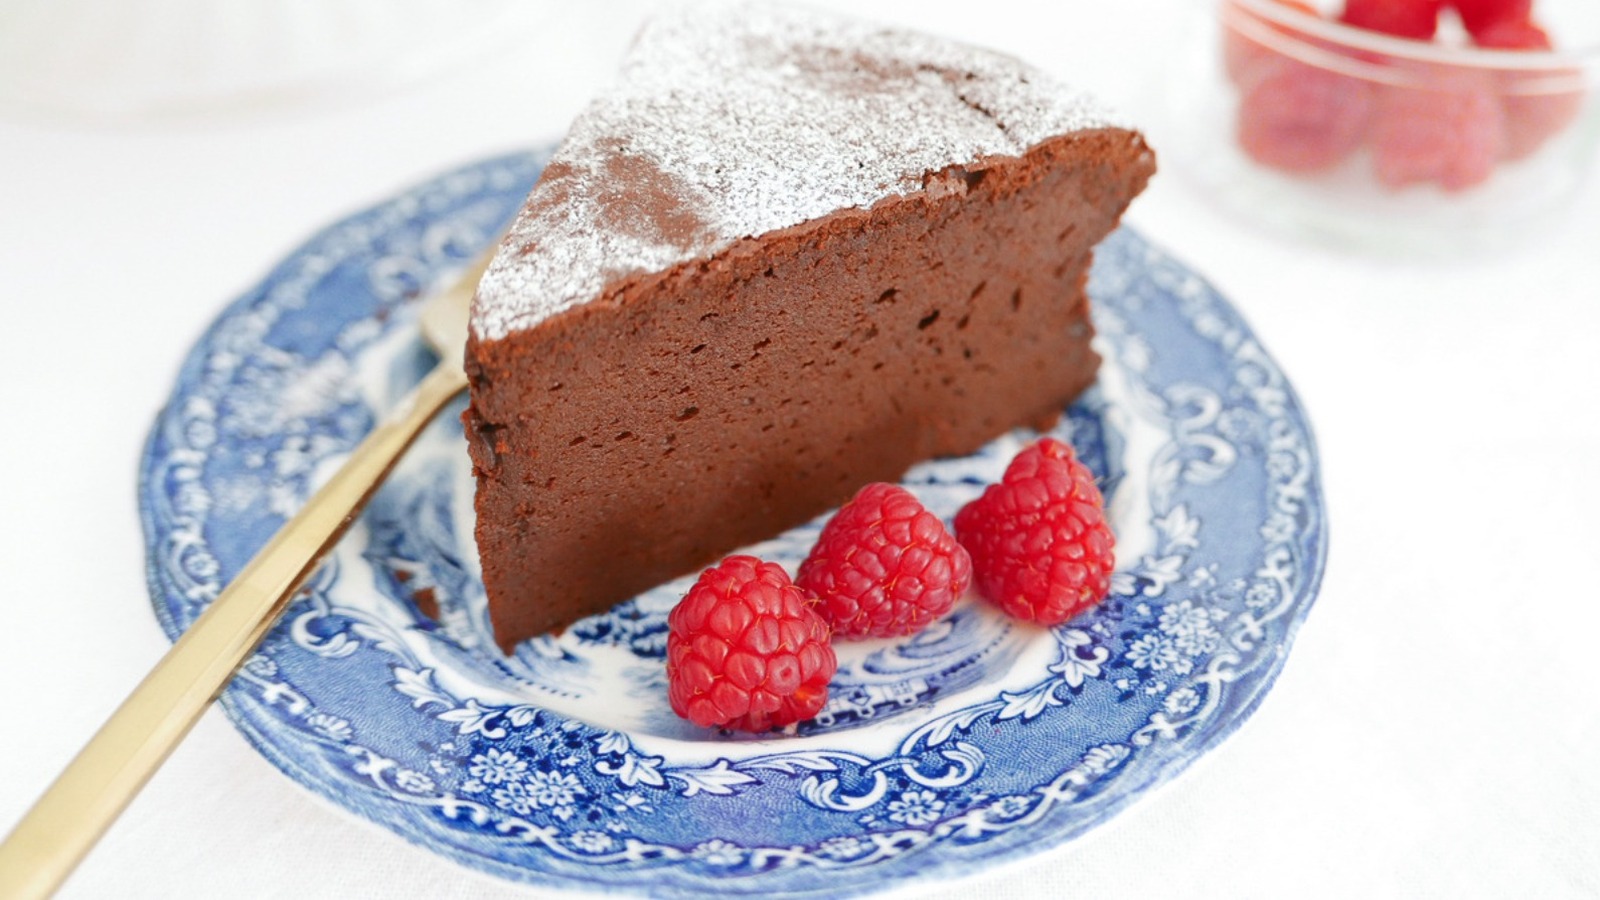 https://www.mashed.com/img/gallery/3-ingredient-chocolate-sponge-cake-recipe/l-intro-1623701517.jpg